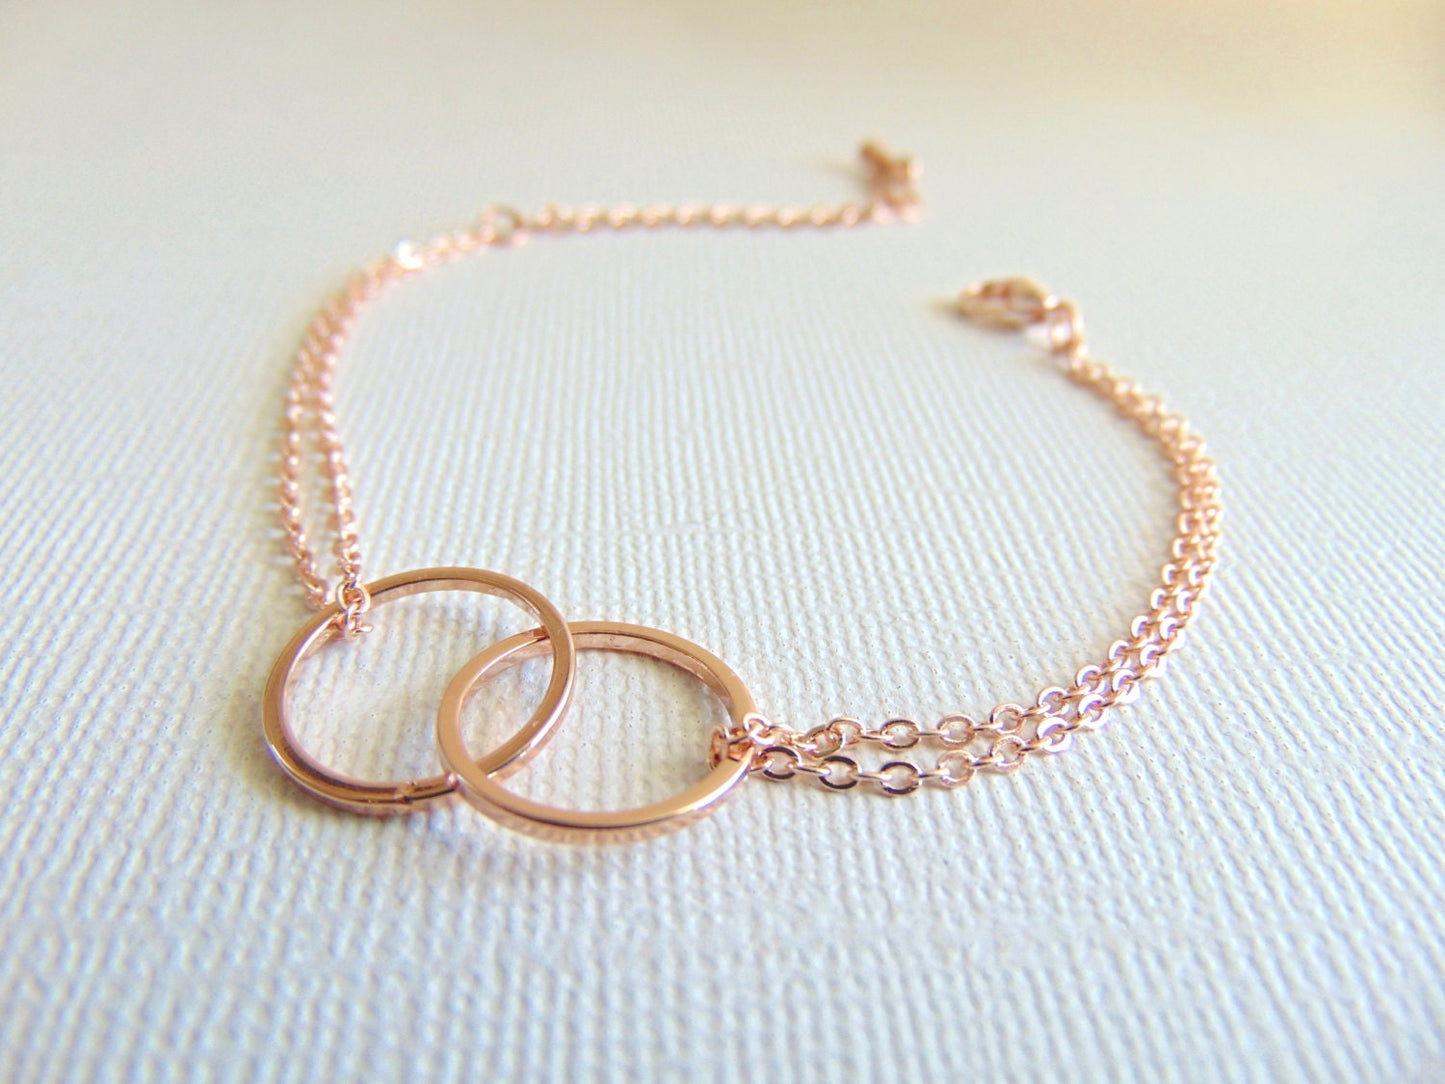 Linked circles Bracelet, Eternity bracelet, Mother daughter bracelet, Dainty jewelry, Mom gift, Lovers gift, interlocking circles